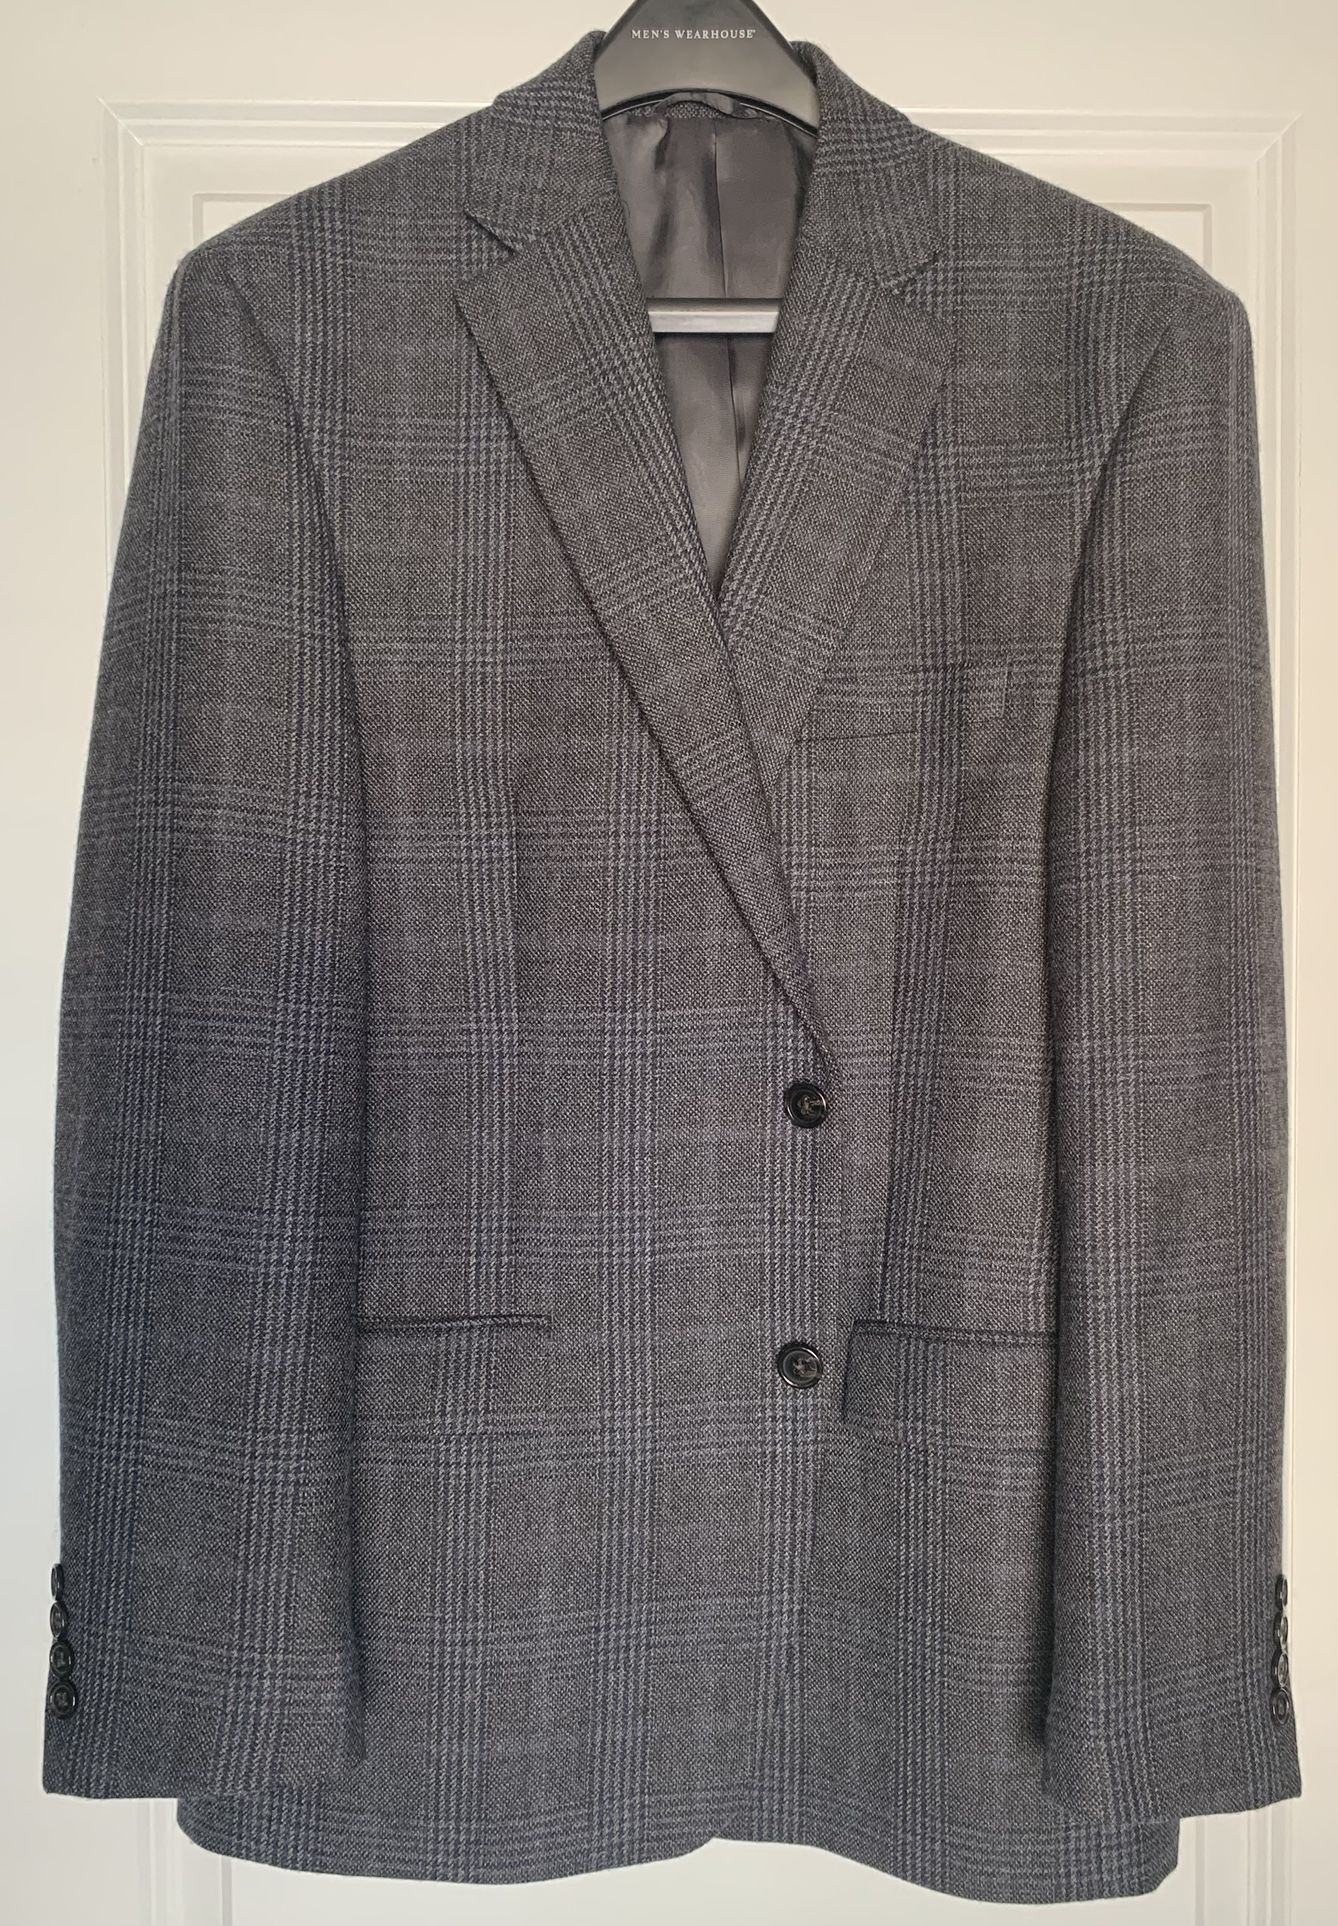 Ralph Lauren Gray Charcoal Grey Blue Plaid Check Sport Coat Jacket Blazer 41R